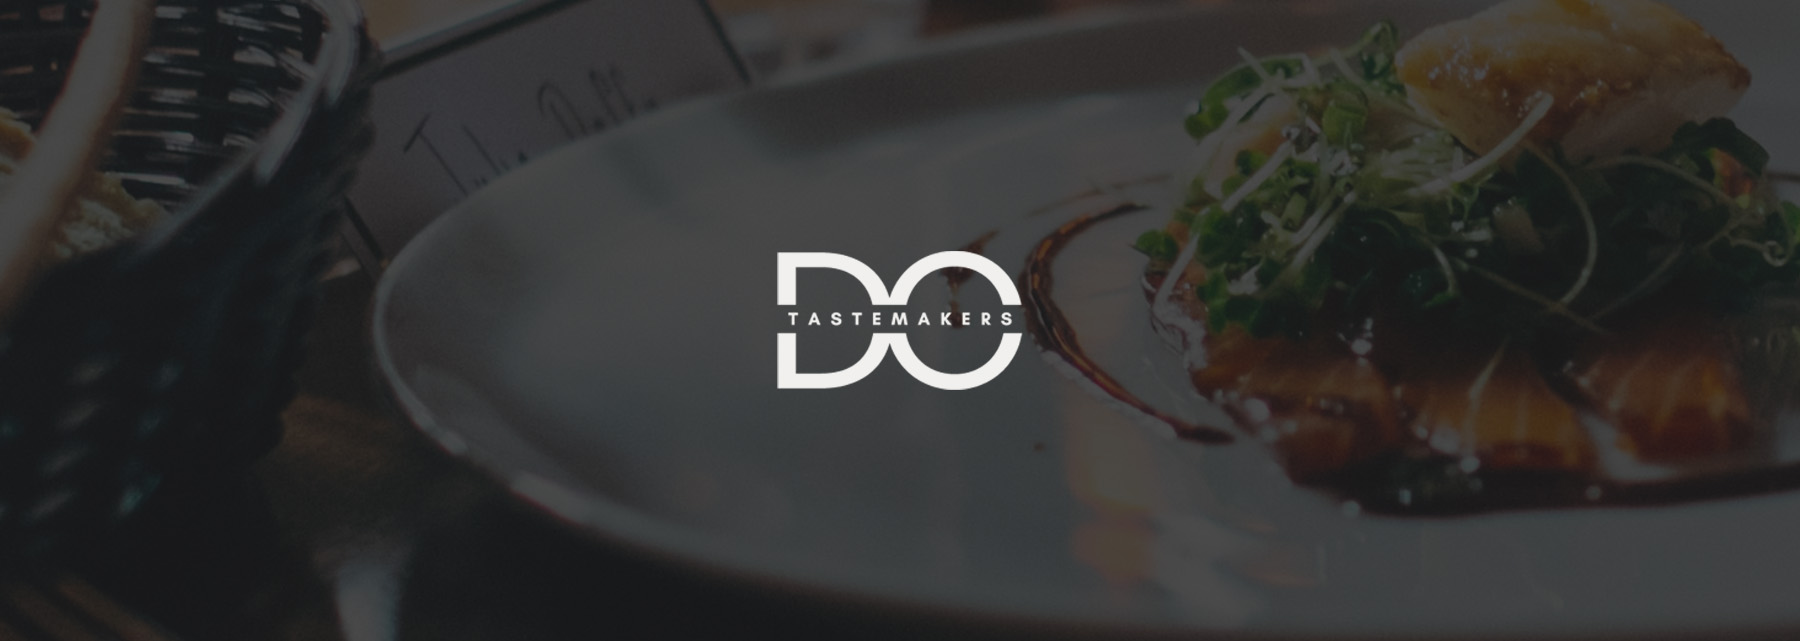 DiningOut Tastemakers graphic logo